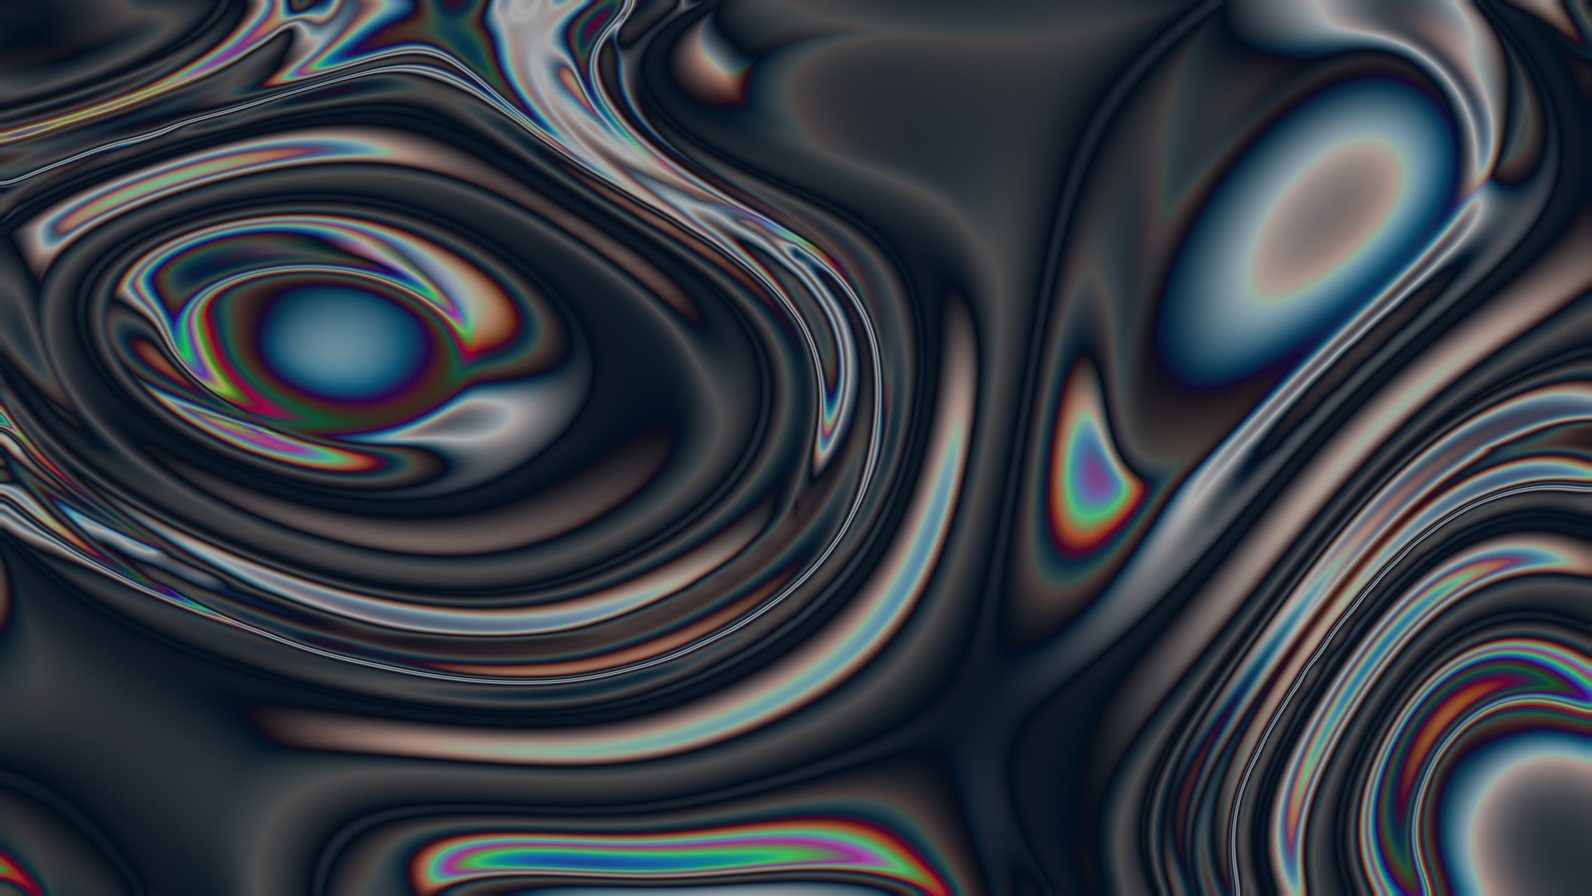 Abstract Liquid Animation 07